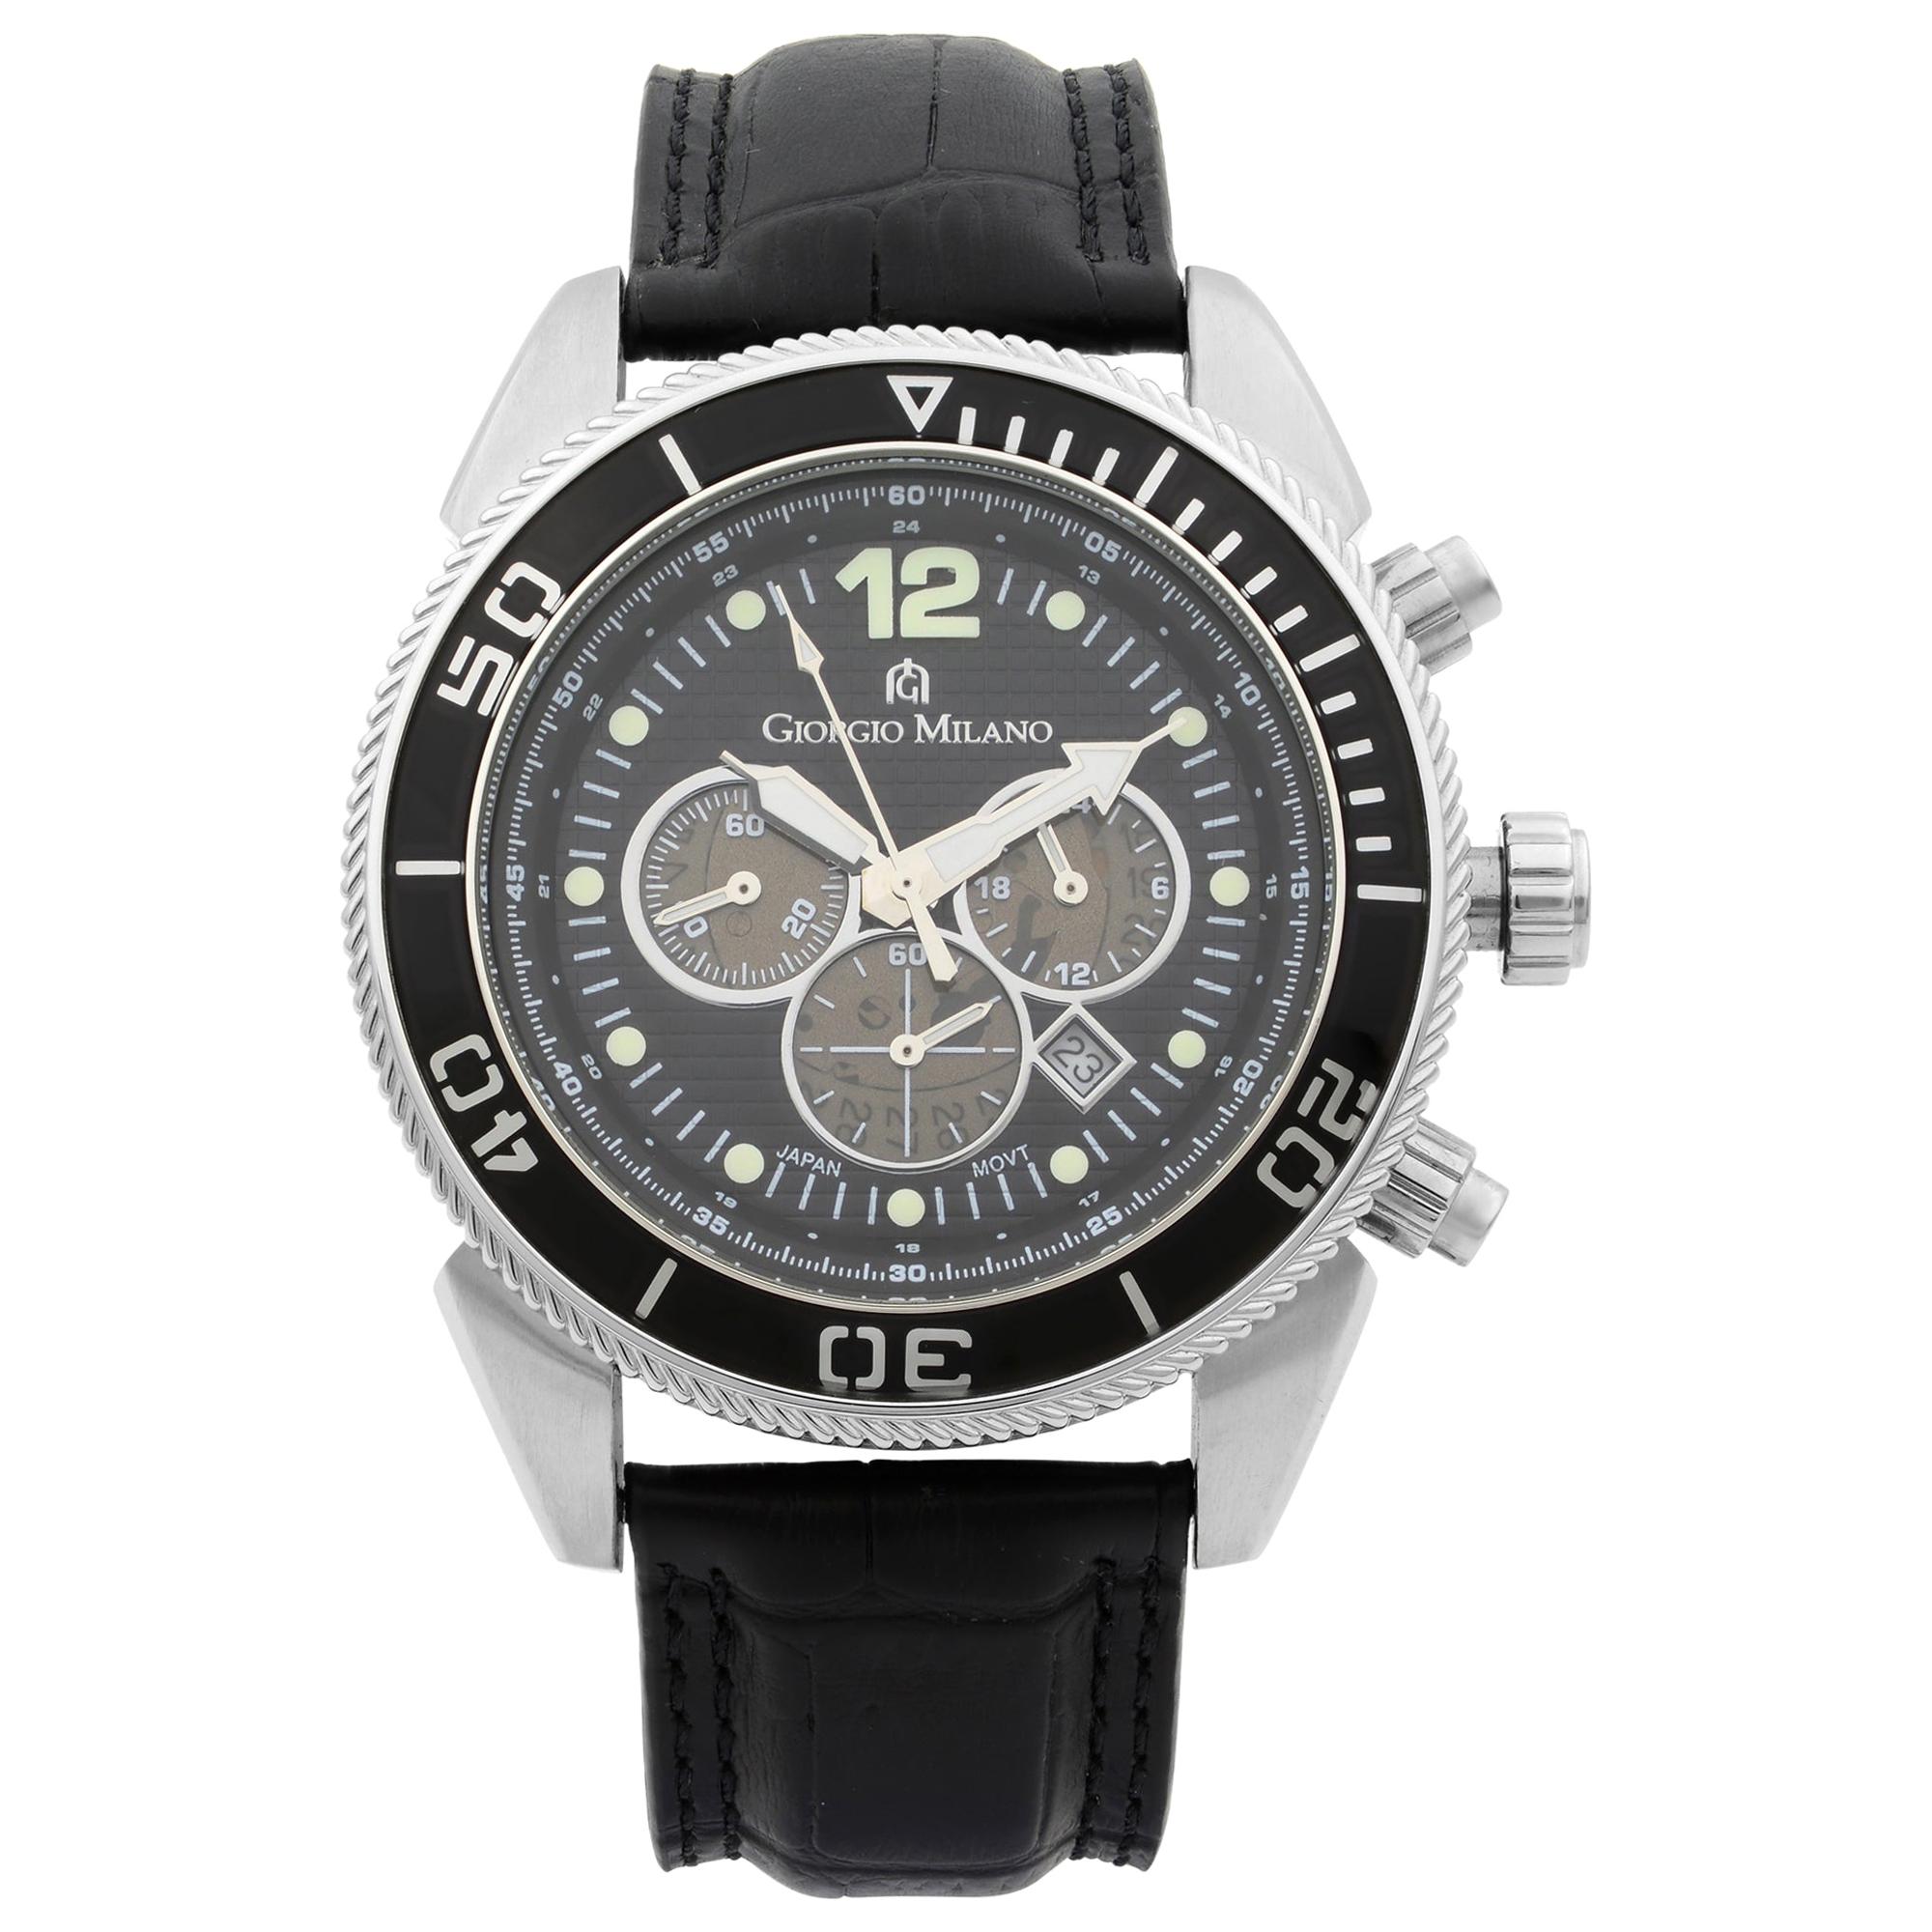 Giorgio Milano Stainless Steel Chronograph Quartz Men's Watch 871ST032